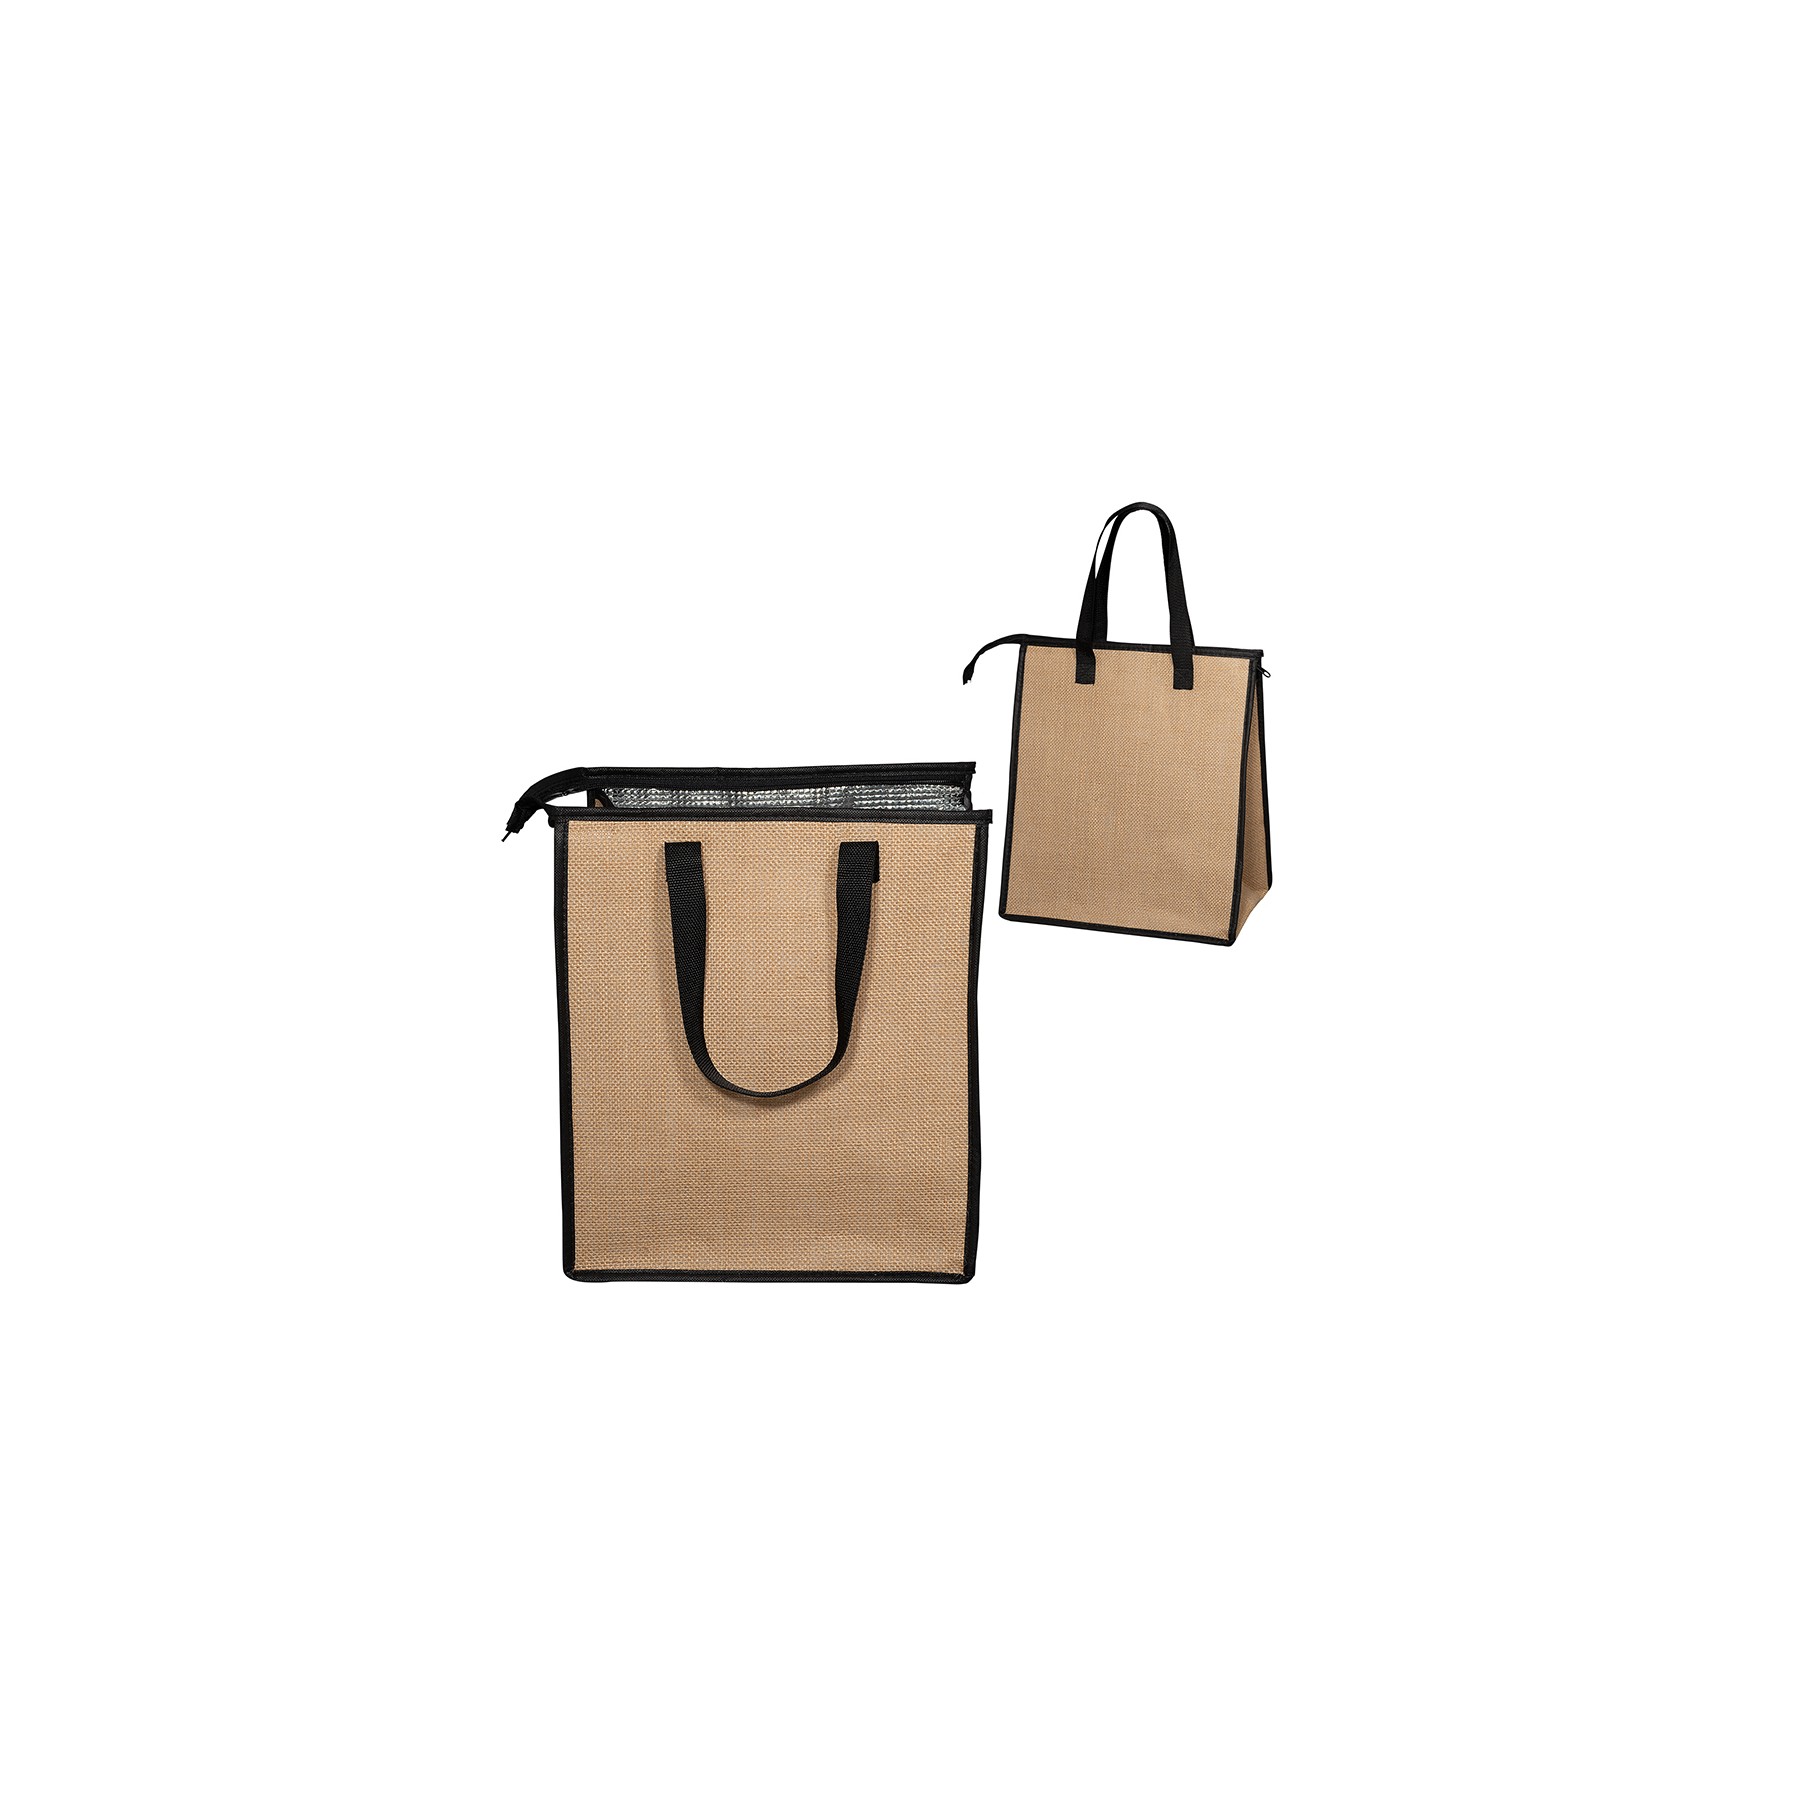 Waterproof Insulated Grocery Jute Burlap Shopping Thermal Cooler Tote Bag